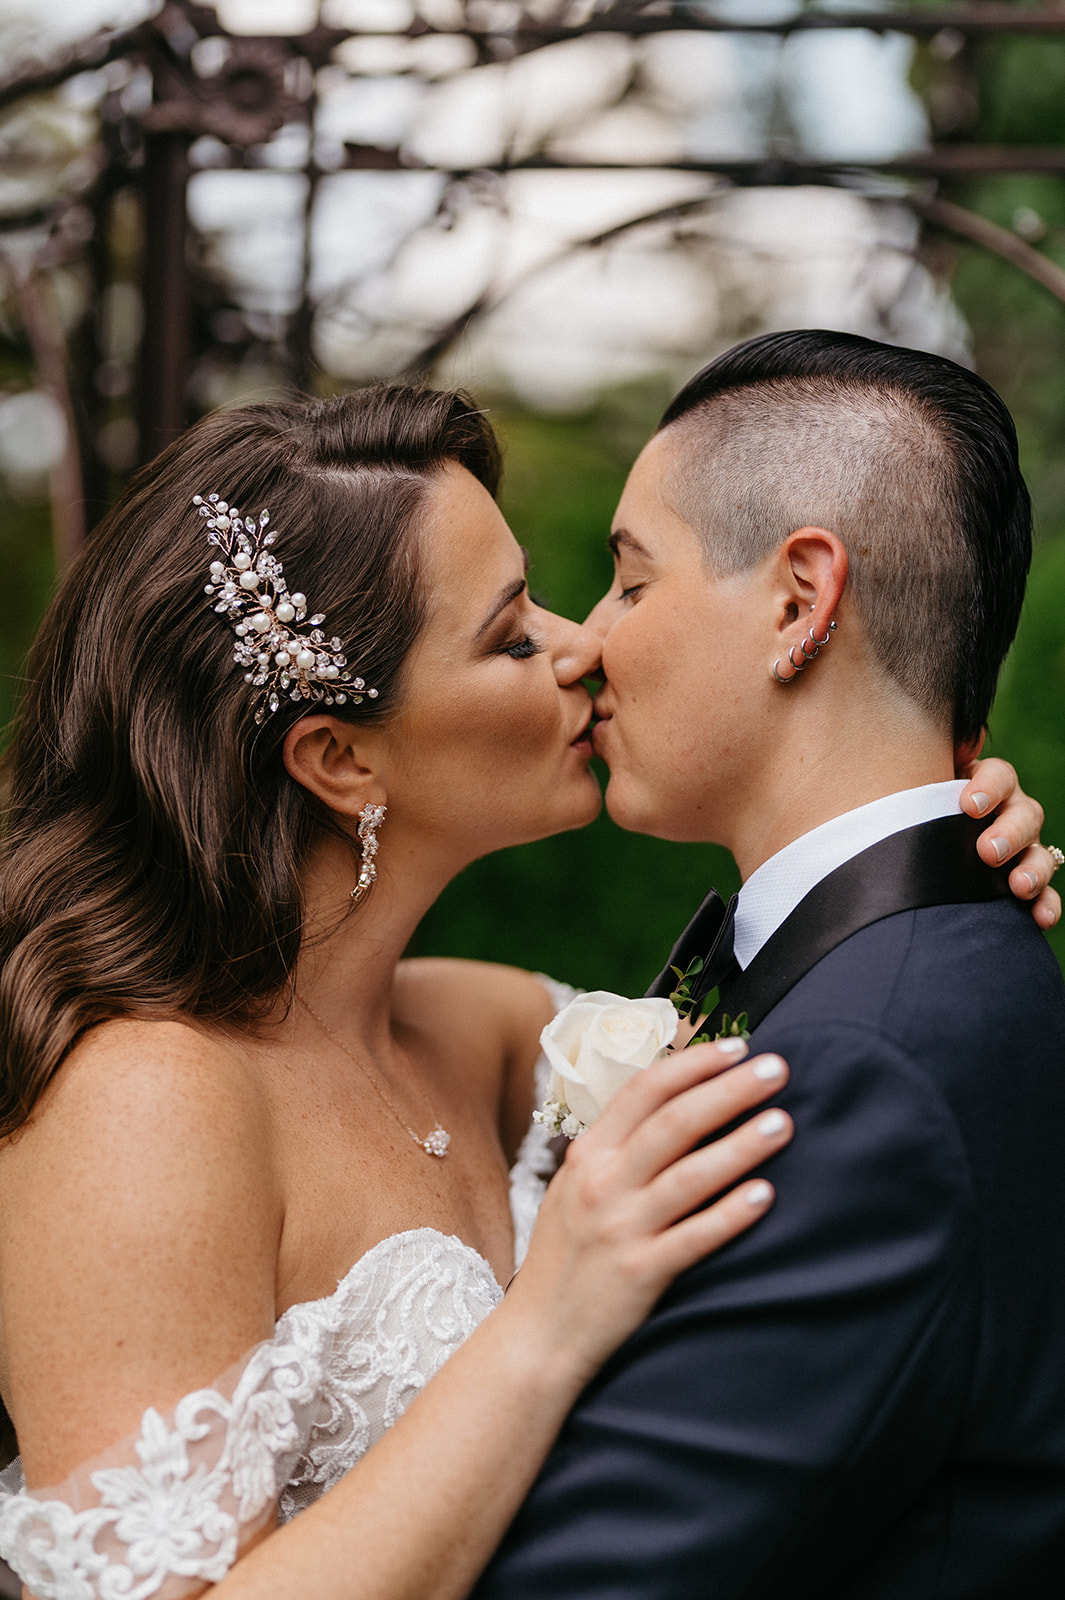 Brides kiss during wedding portraits at hudson valley wedding